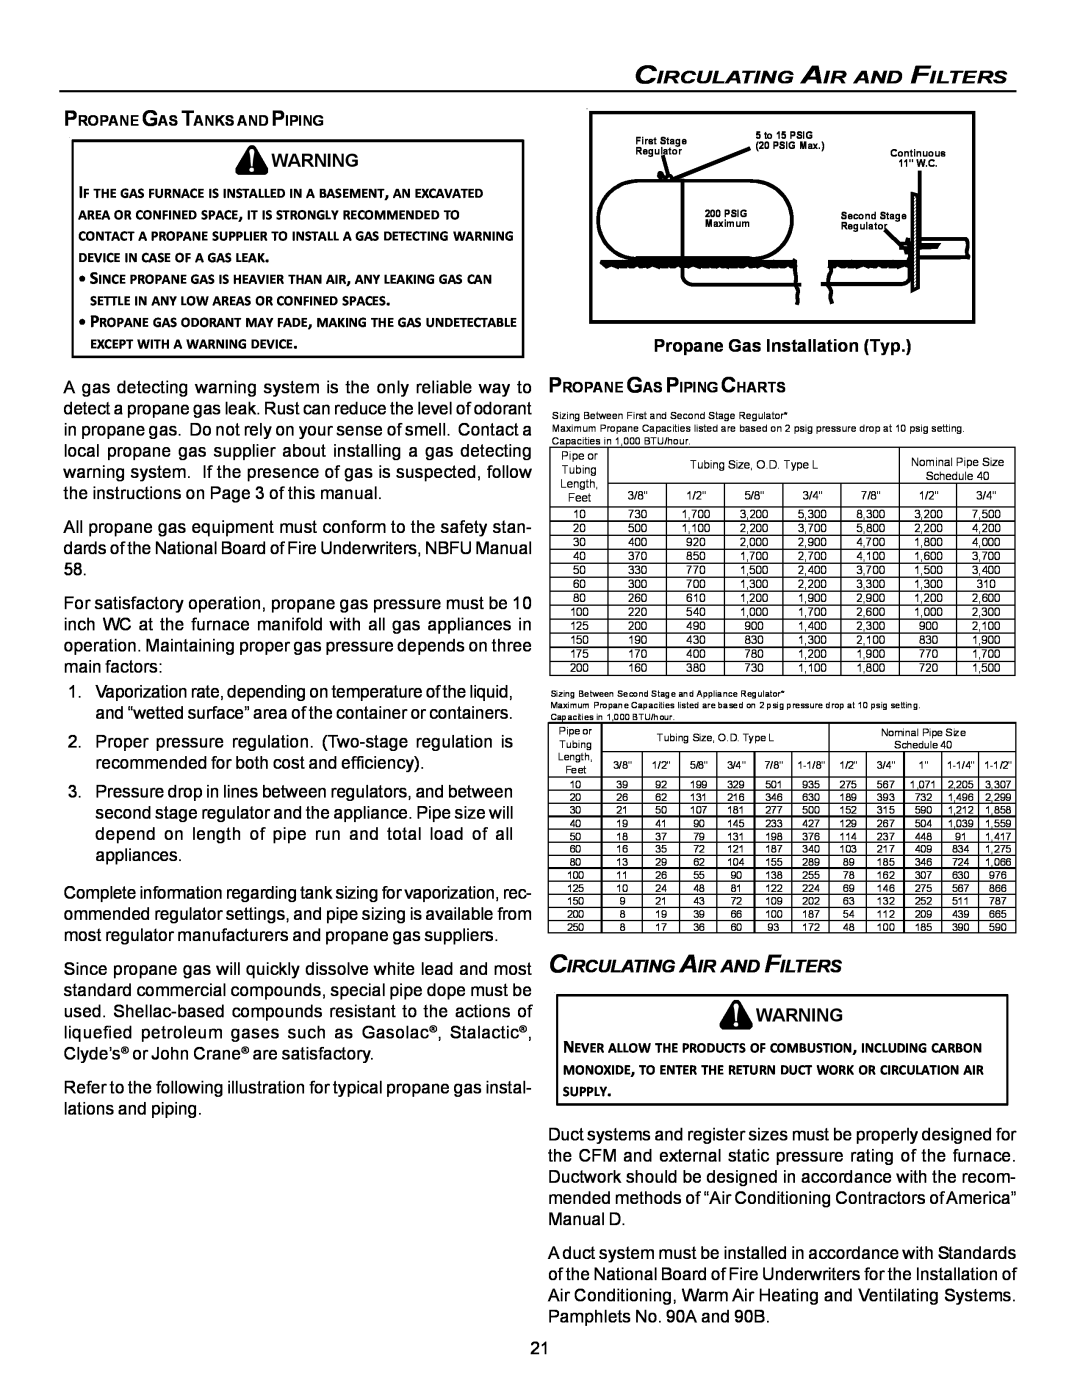 Goodman Mfg VC8 instruction manual Circulating Air And Filters, Propane Gas Installation Typ 